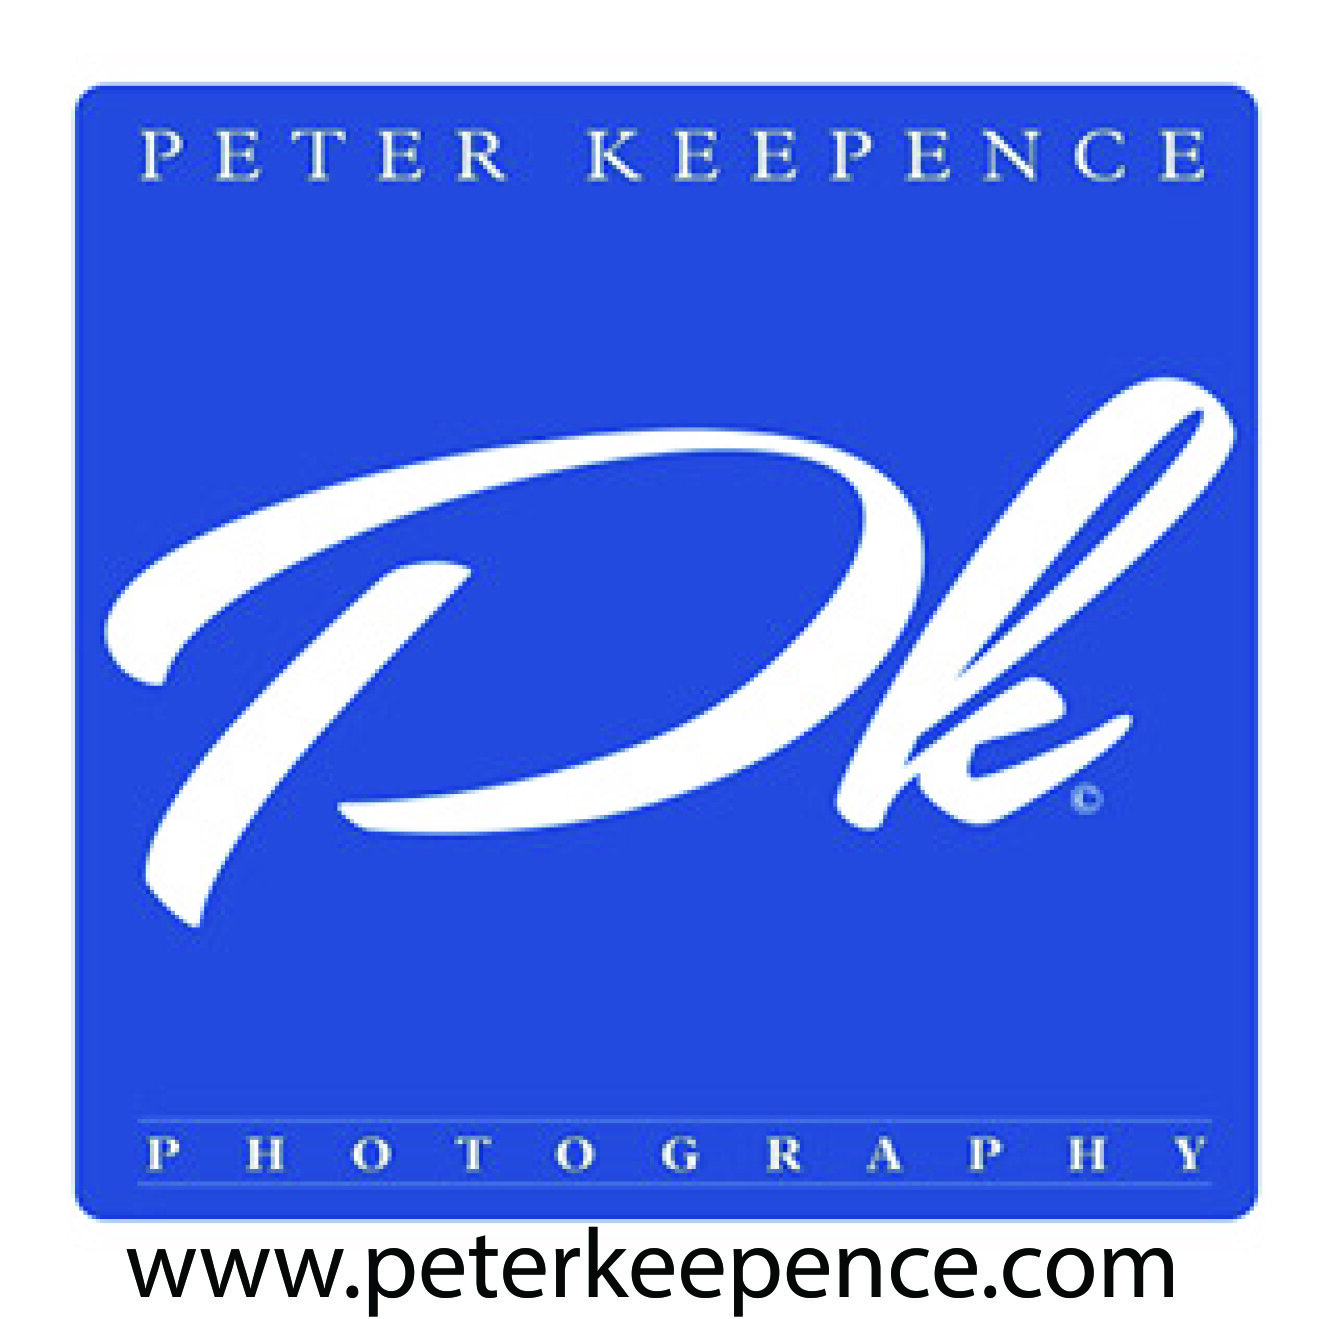 www.peterkeepence.com